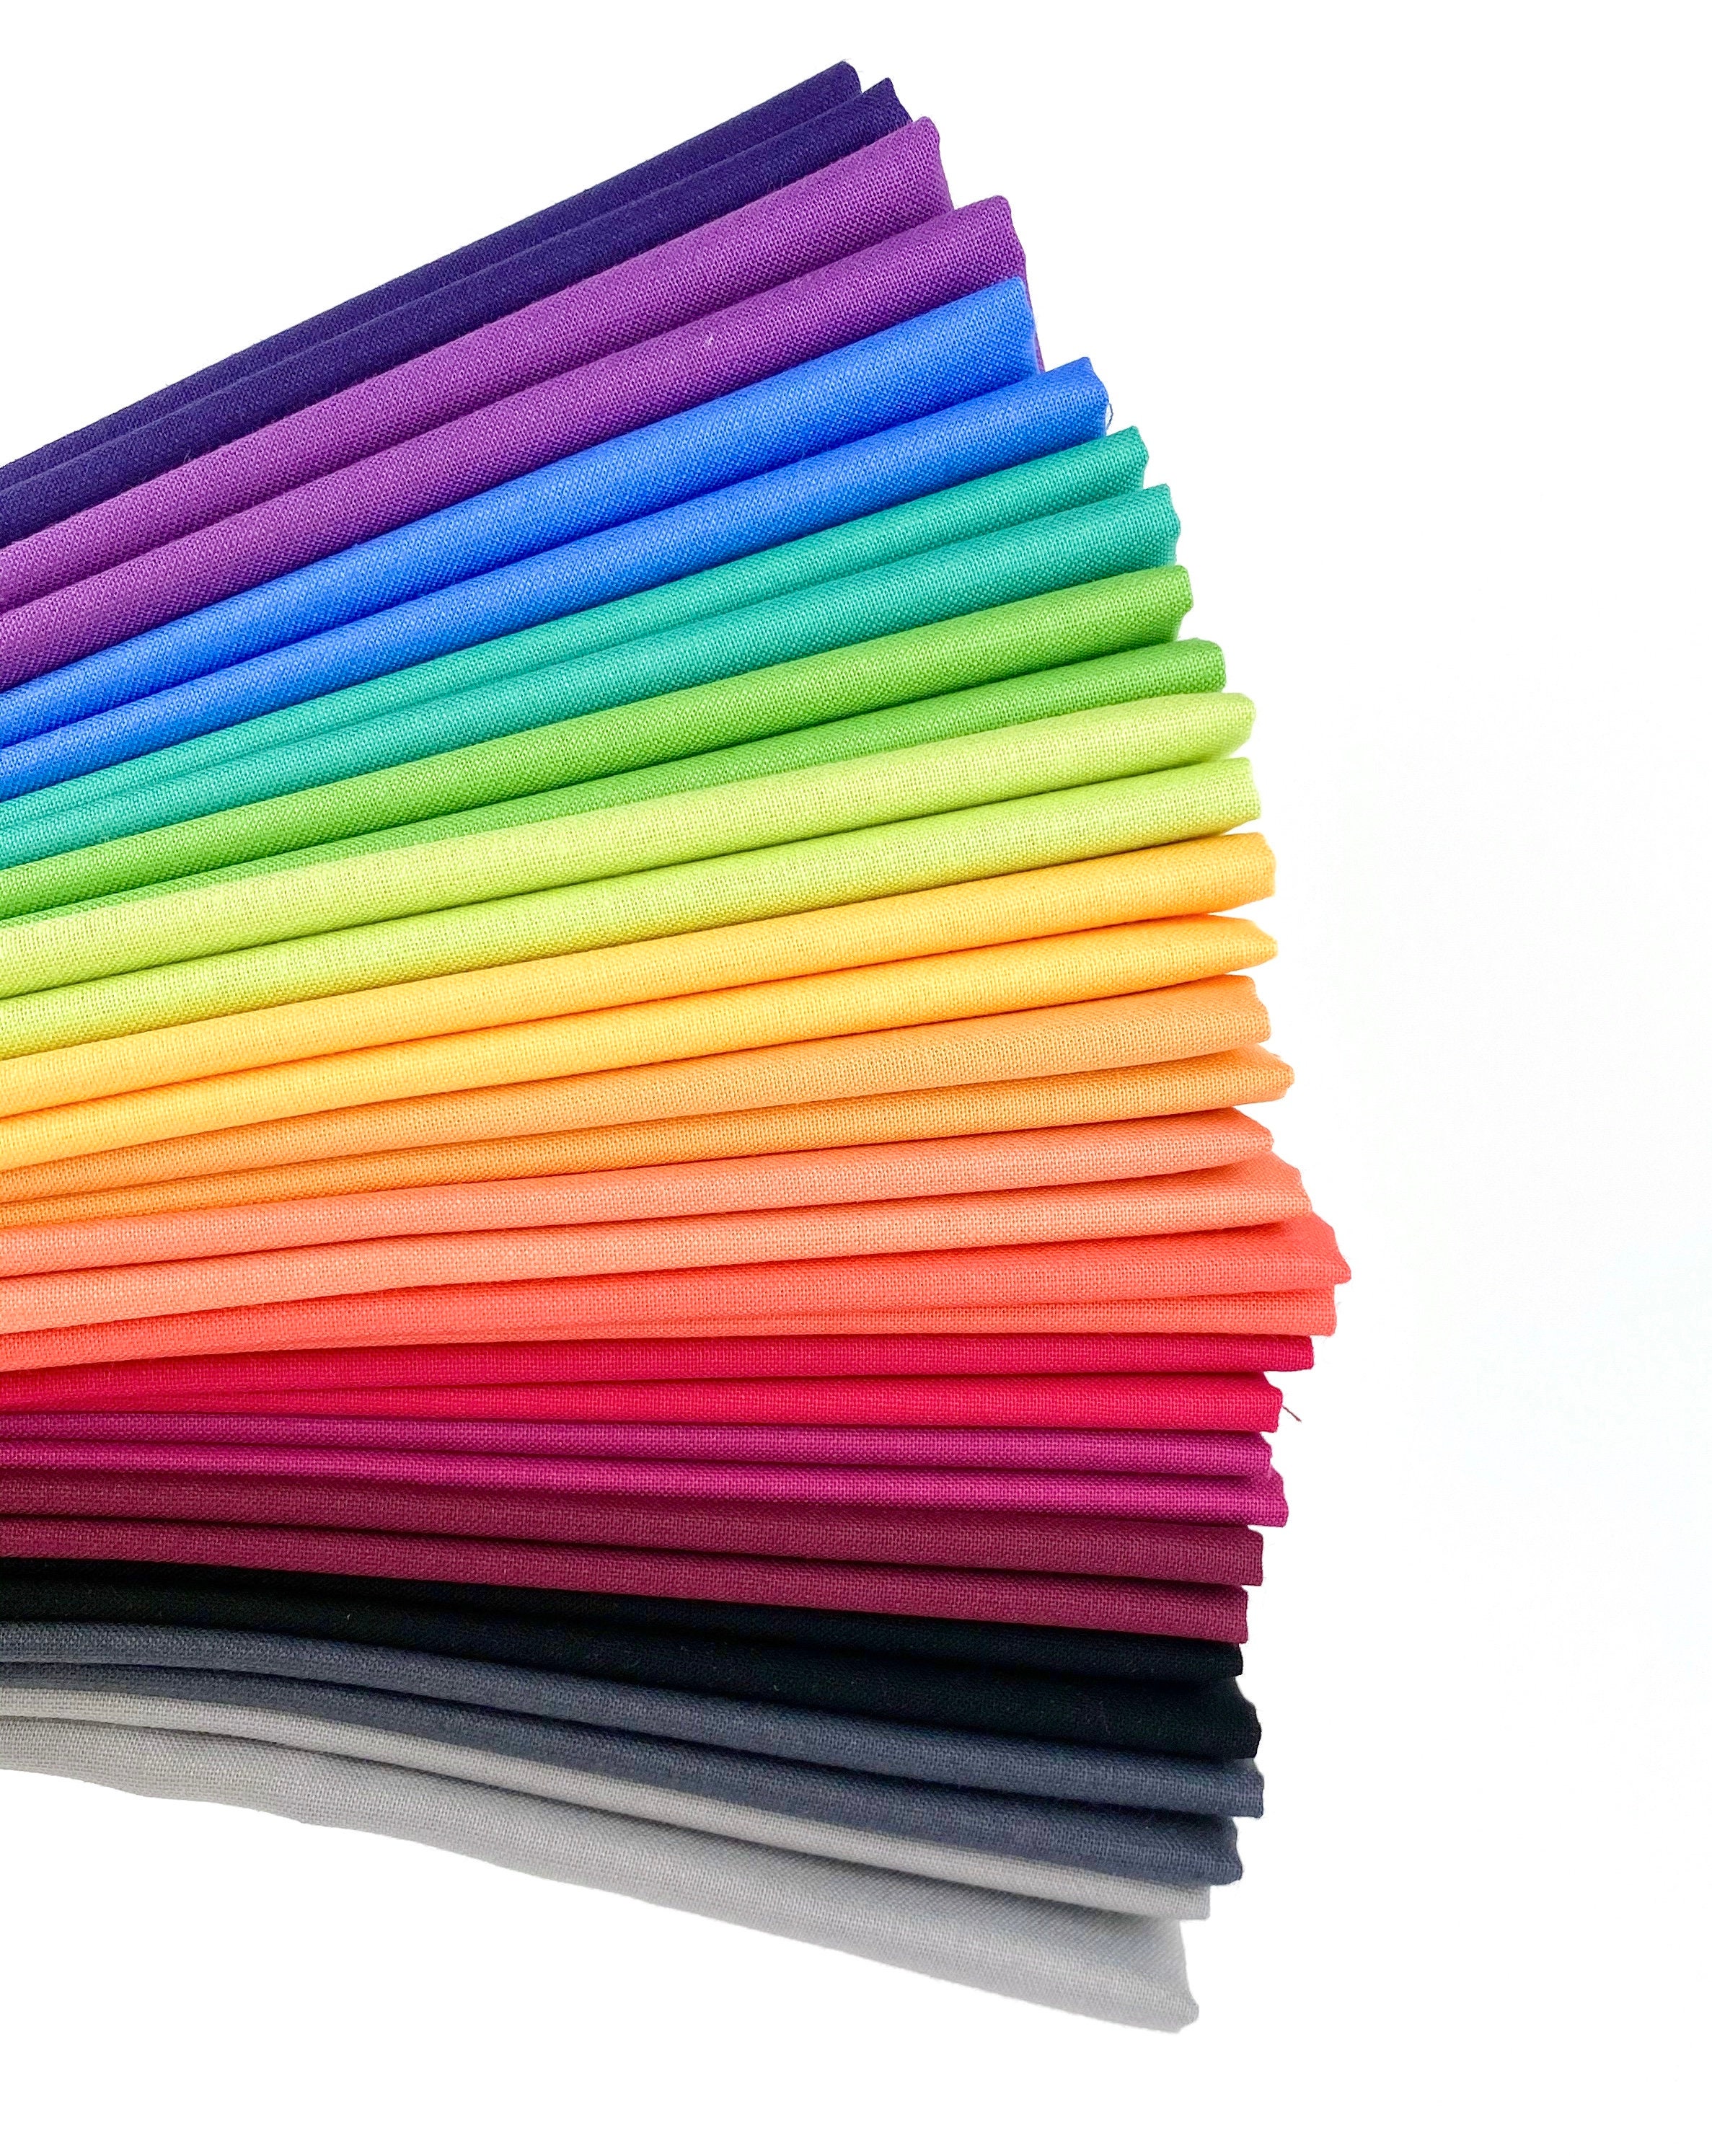 Threadart 12 Fat Quarter Bundle - Rainbow and Pastel Solids 100% Cotton  Fabric - Premium 100% Cotton Quilting Fabric - No Duplicates - Full Size  Fat